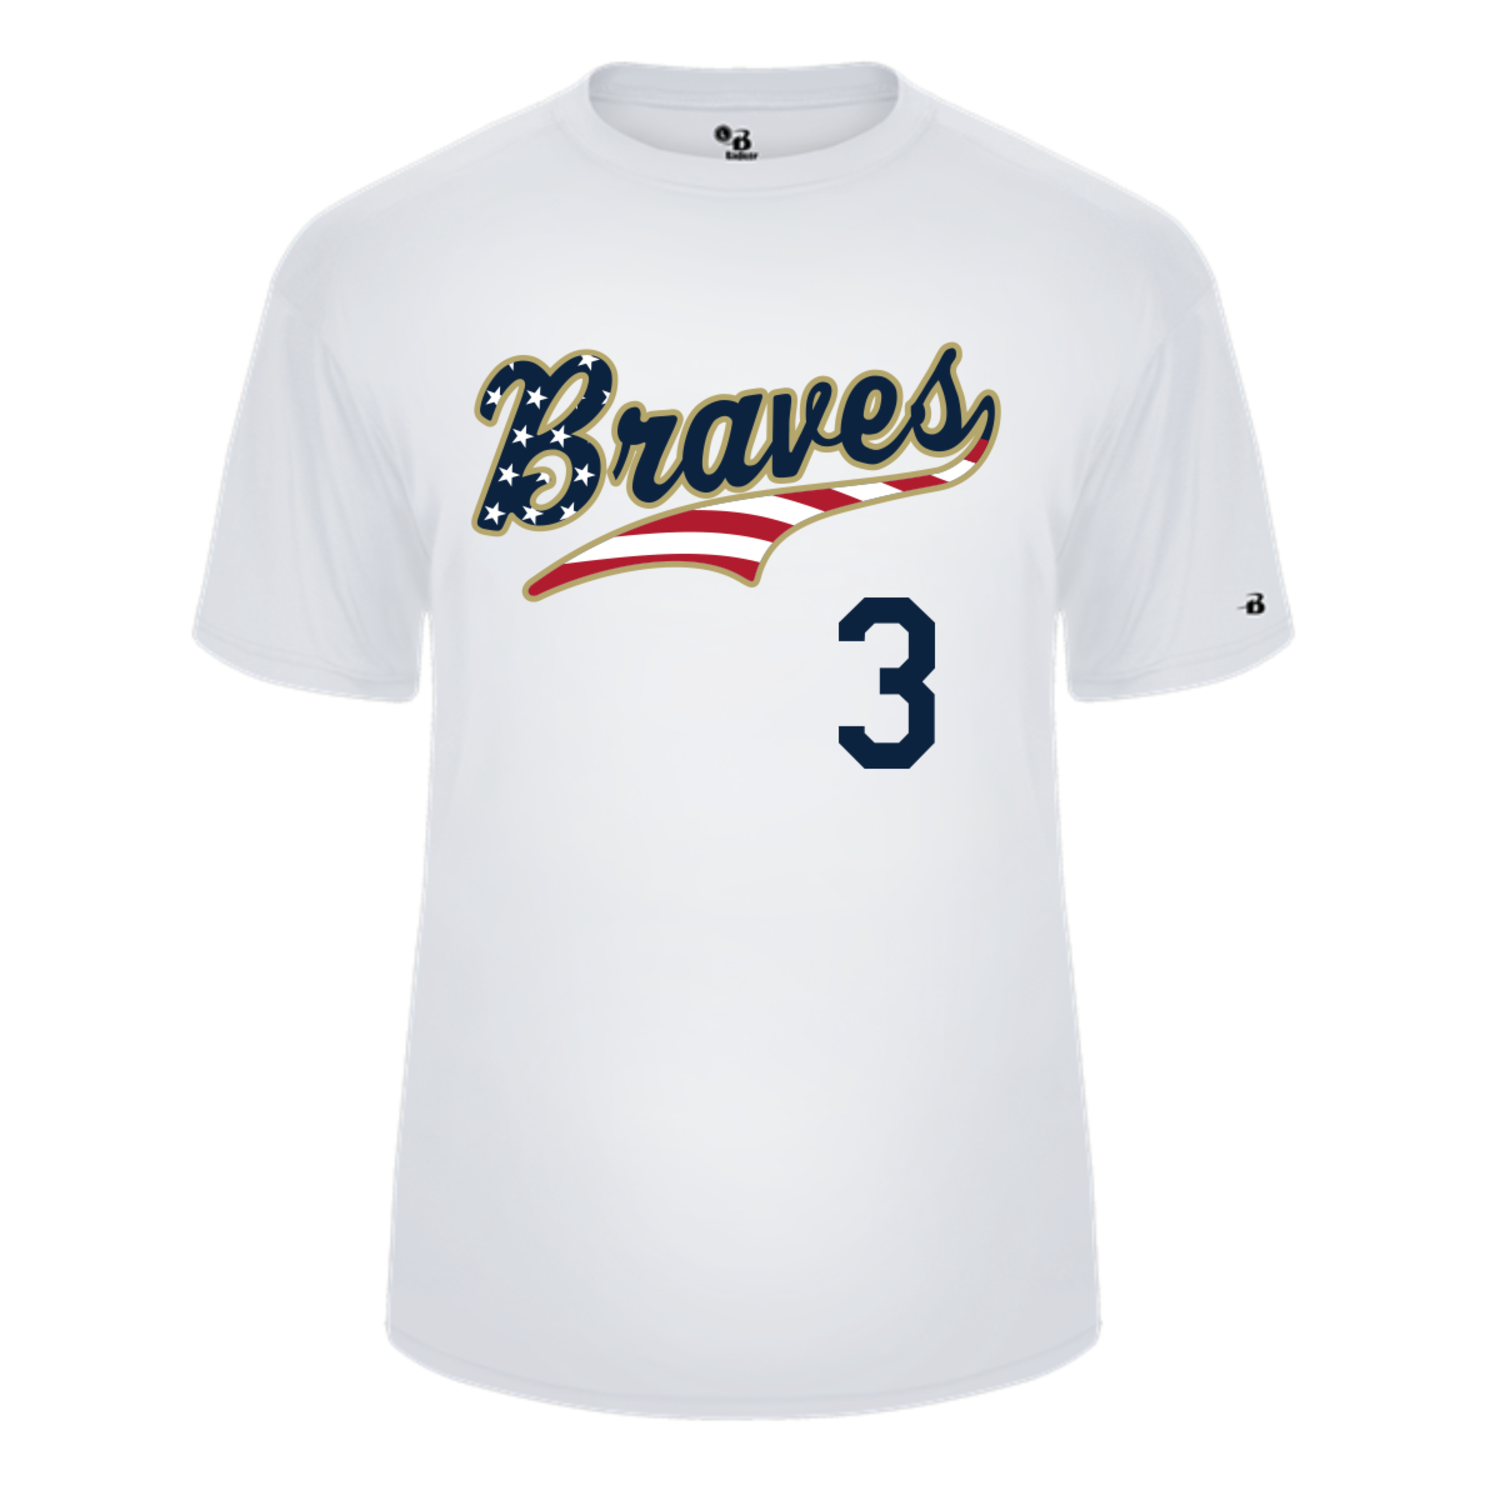 Badger Braves Baseball Navy USA Player Jersey